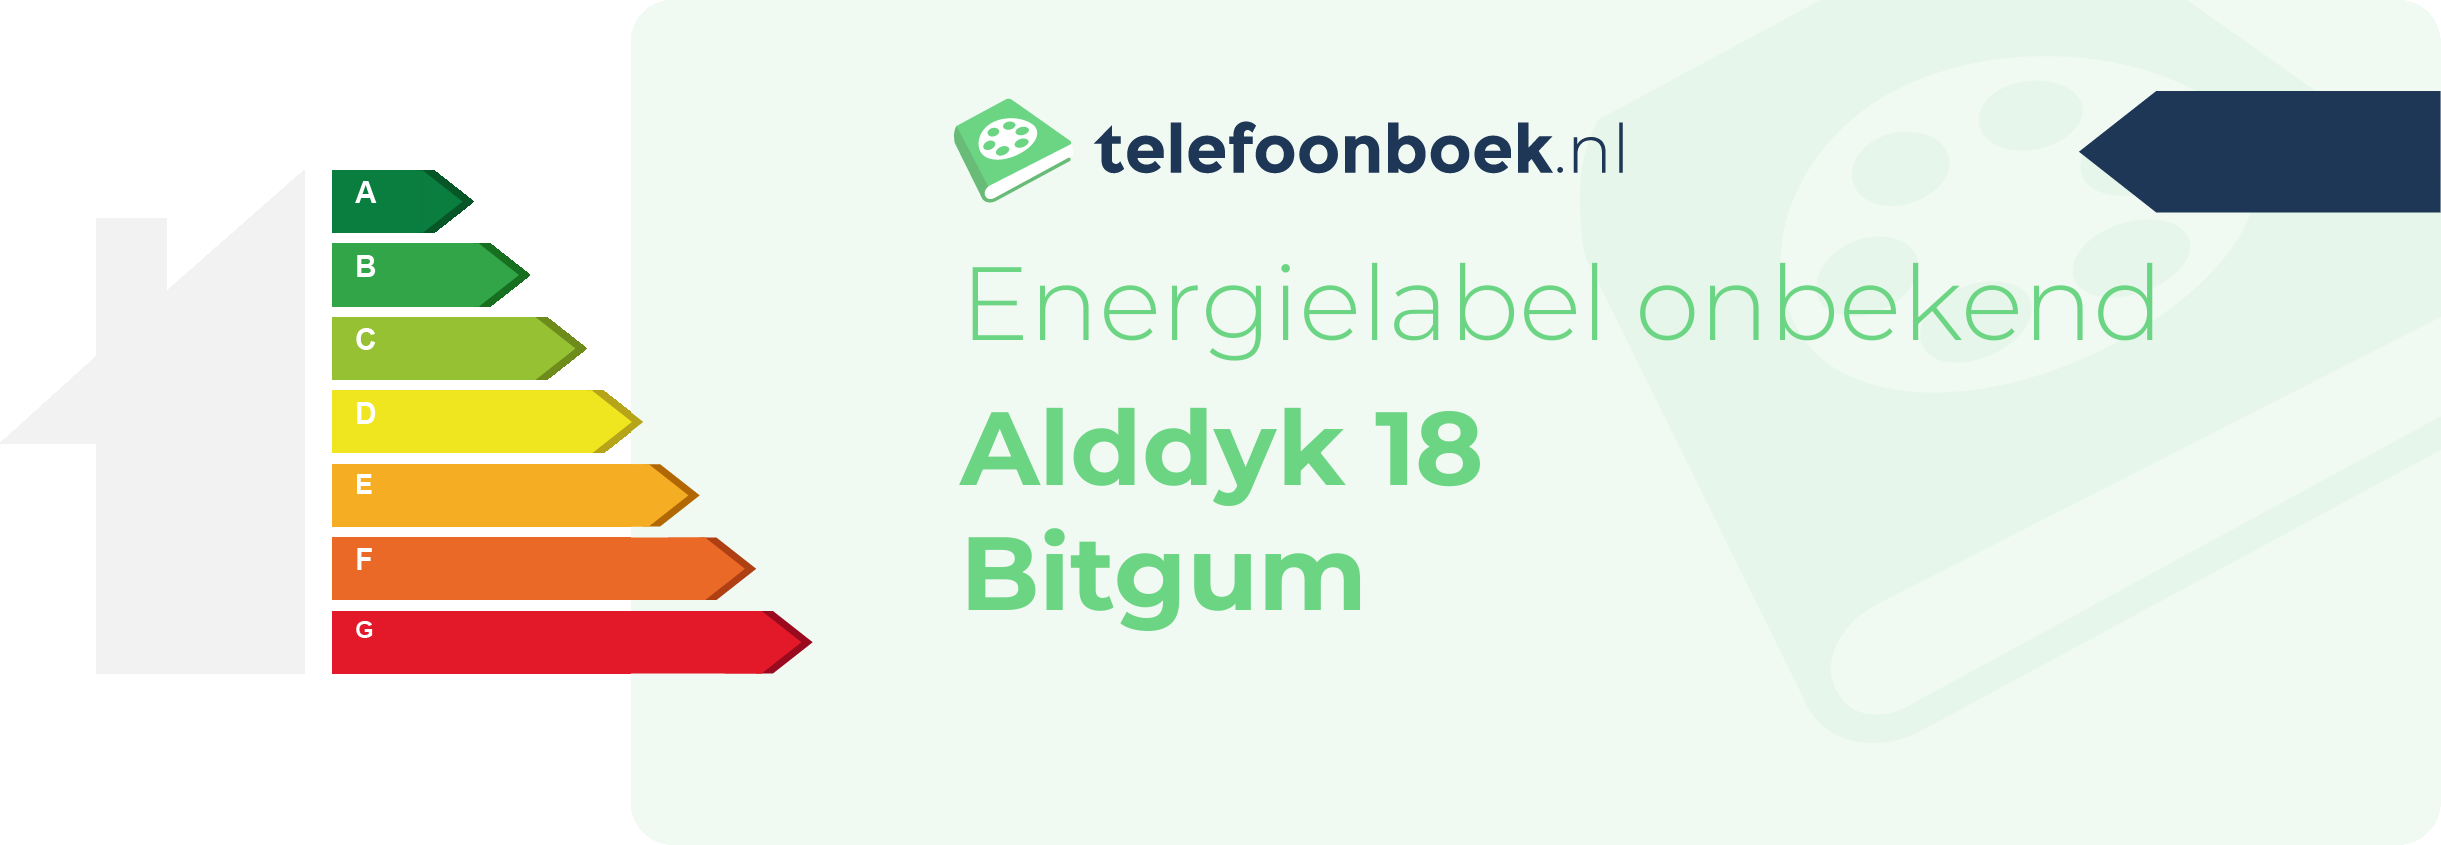 Energielabel Alddyk 18 Bitgum